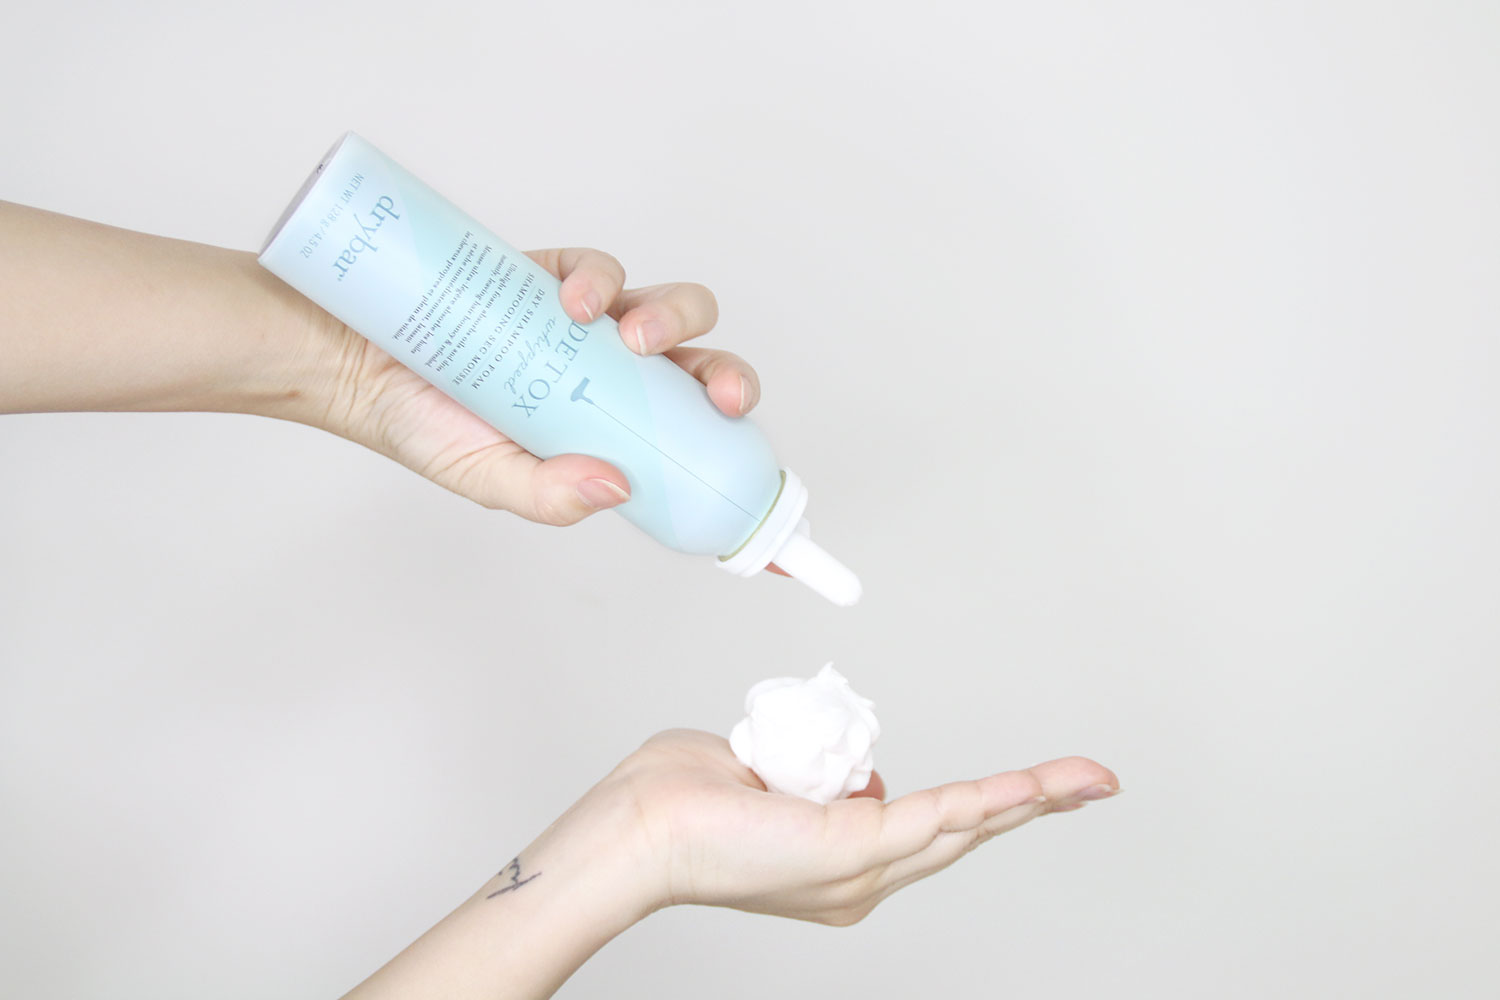 Drybar Detox Whipped Dry Shampoo Foam